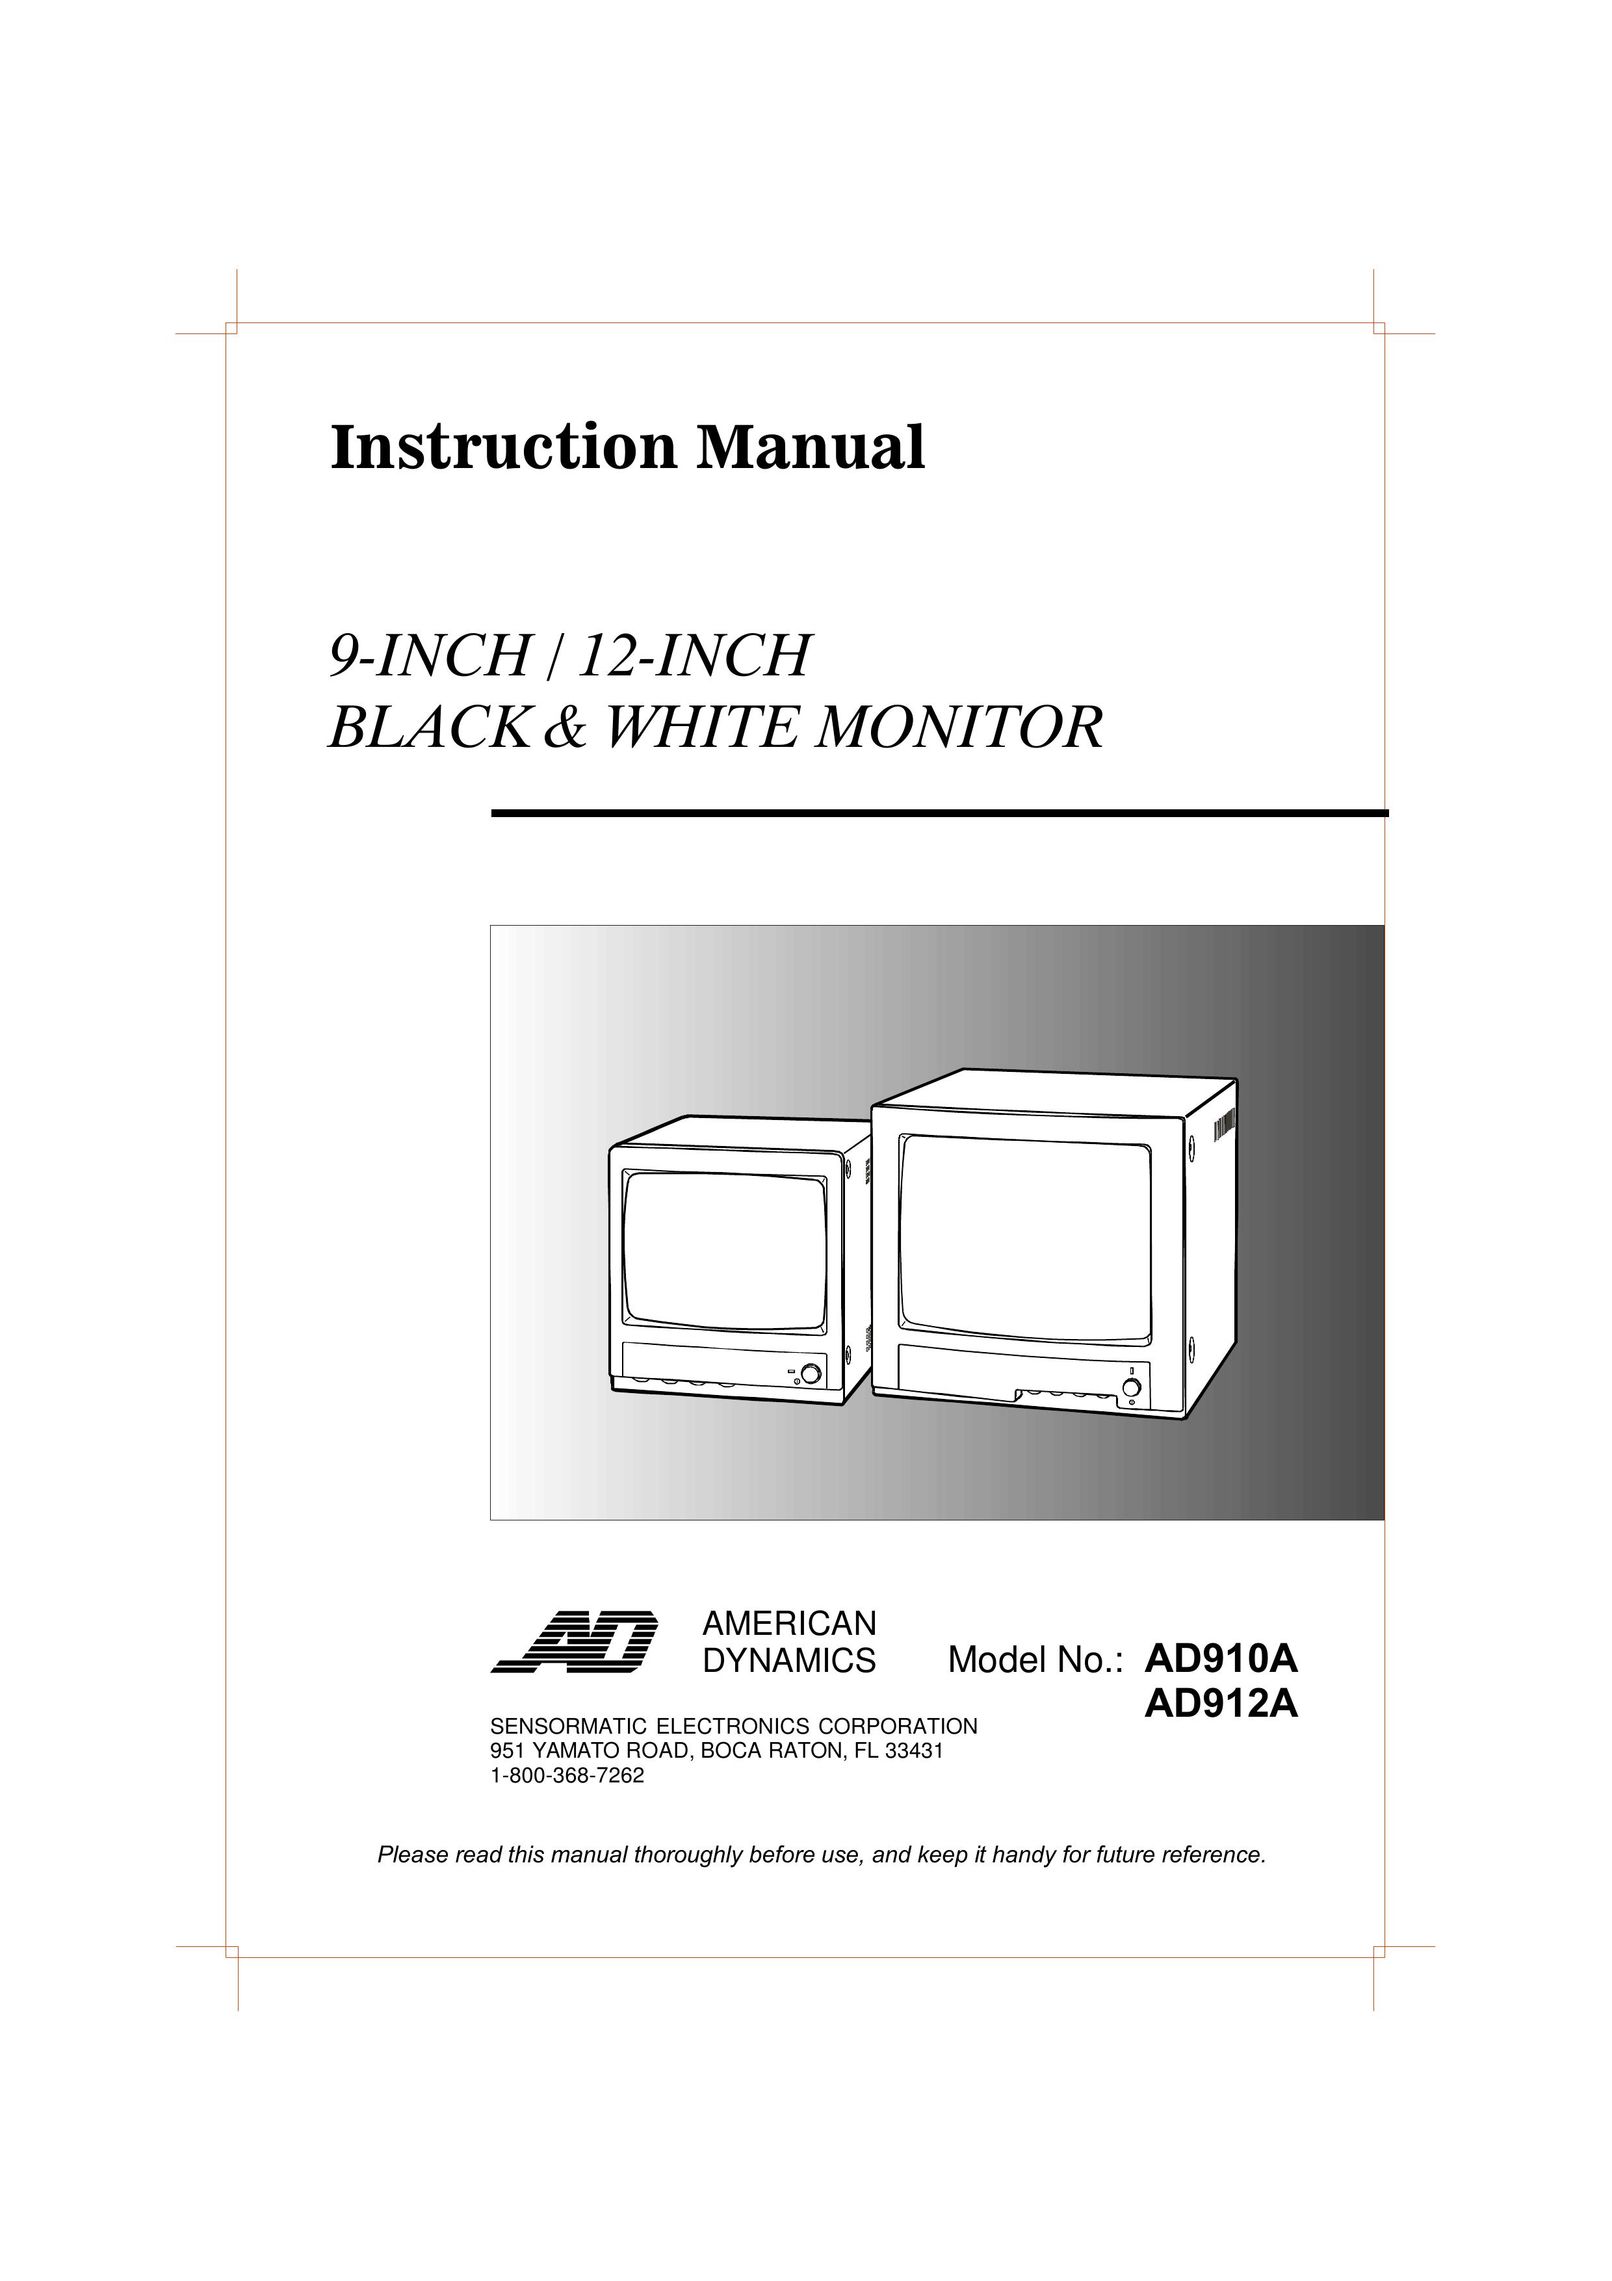 American Dynamics AD910A Computer Monitor User Manual